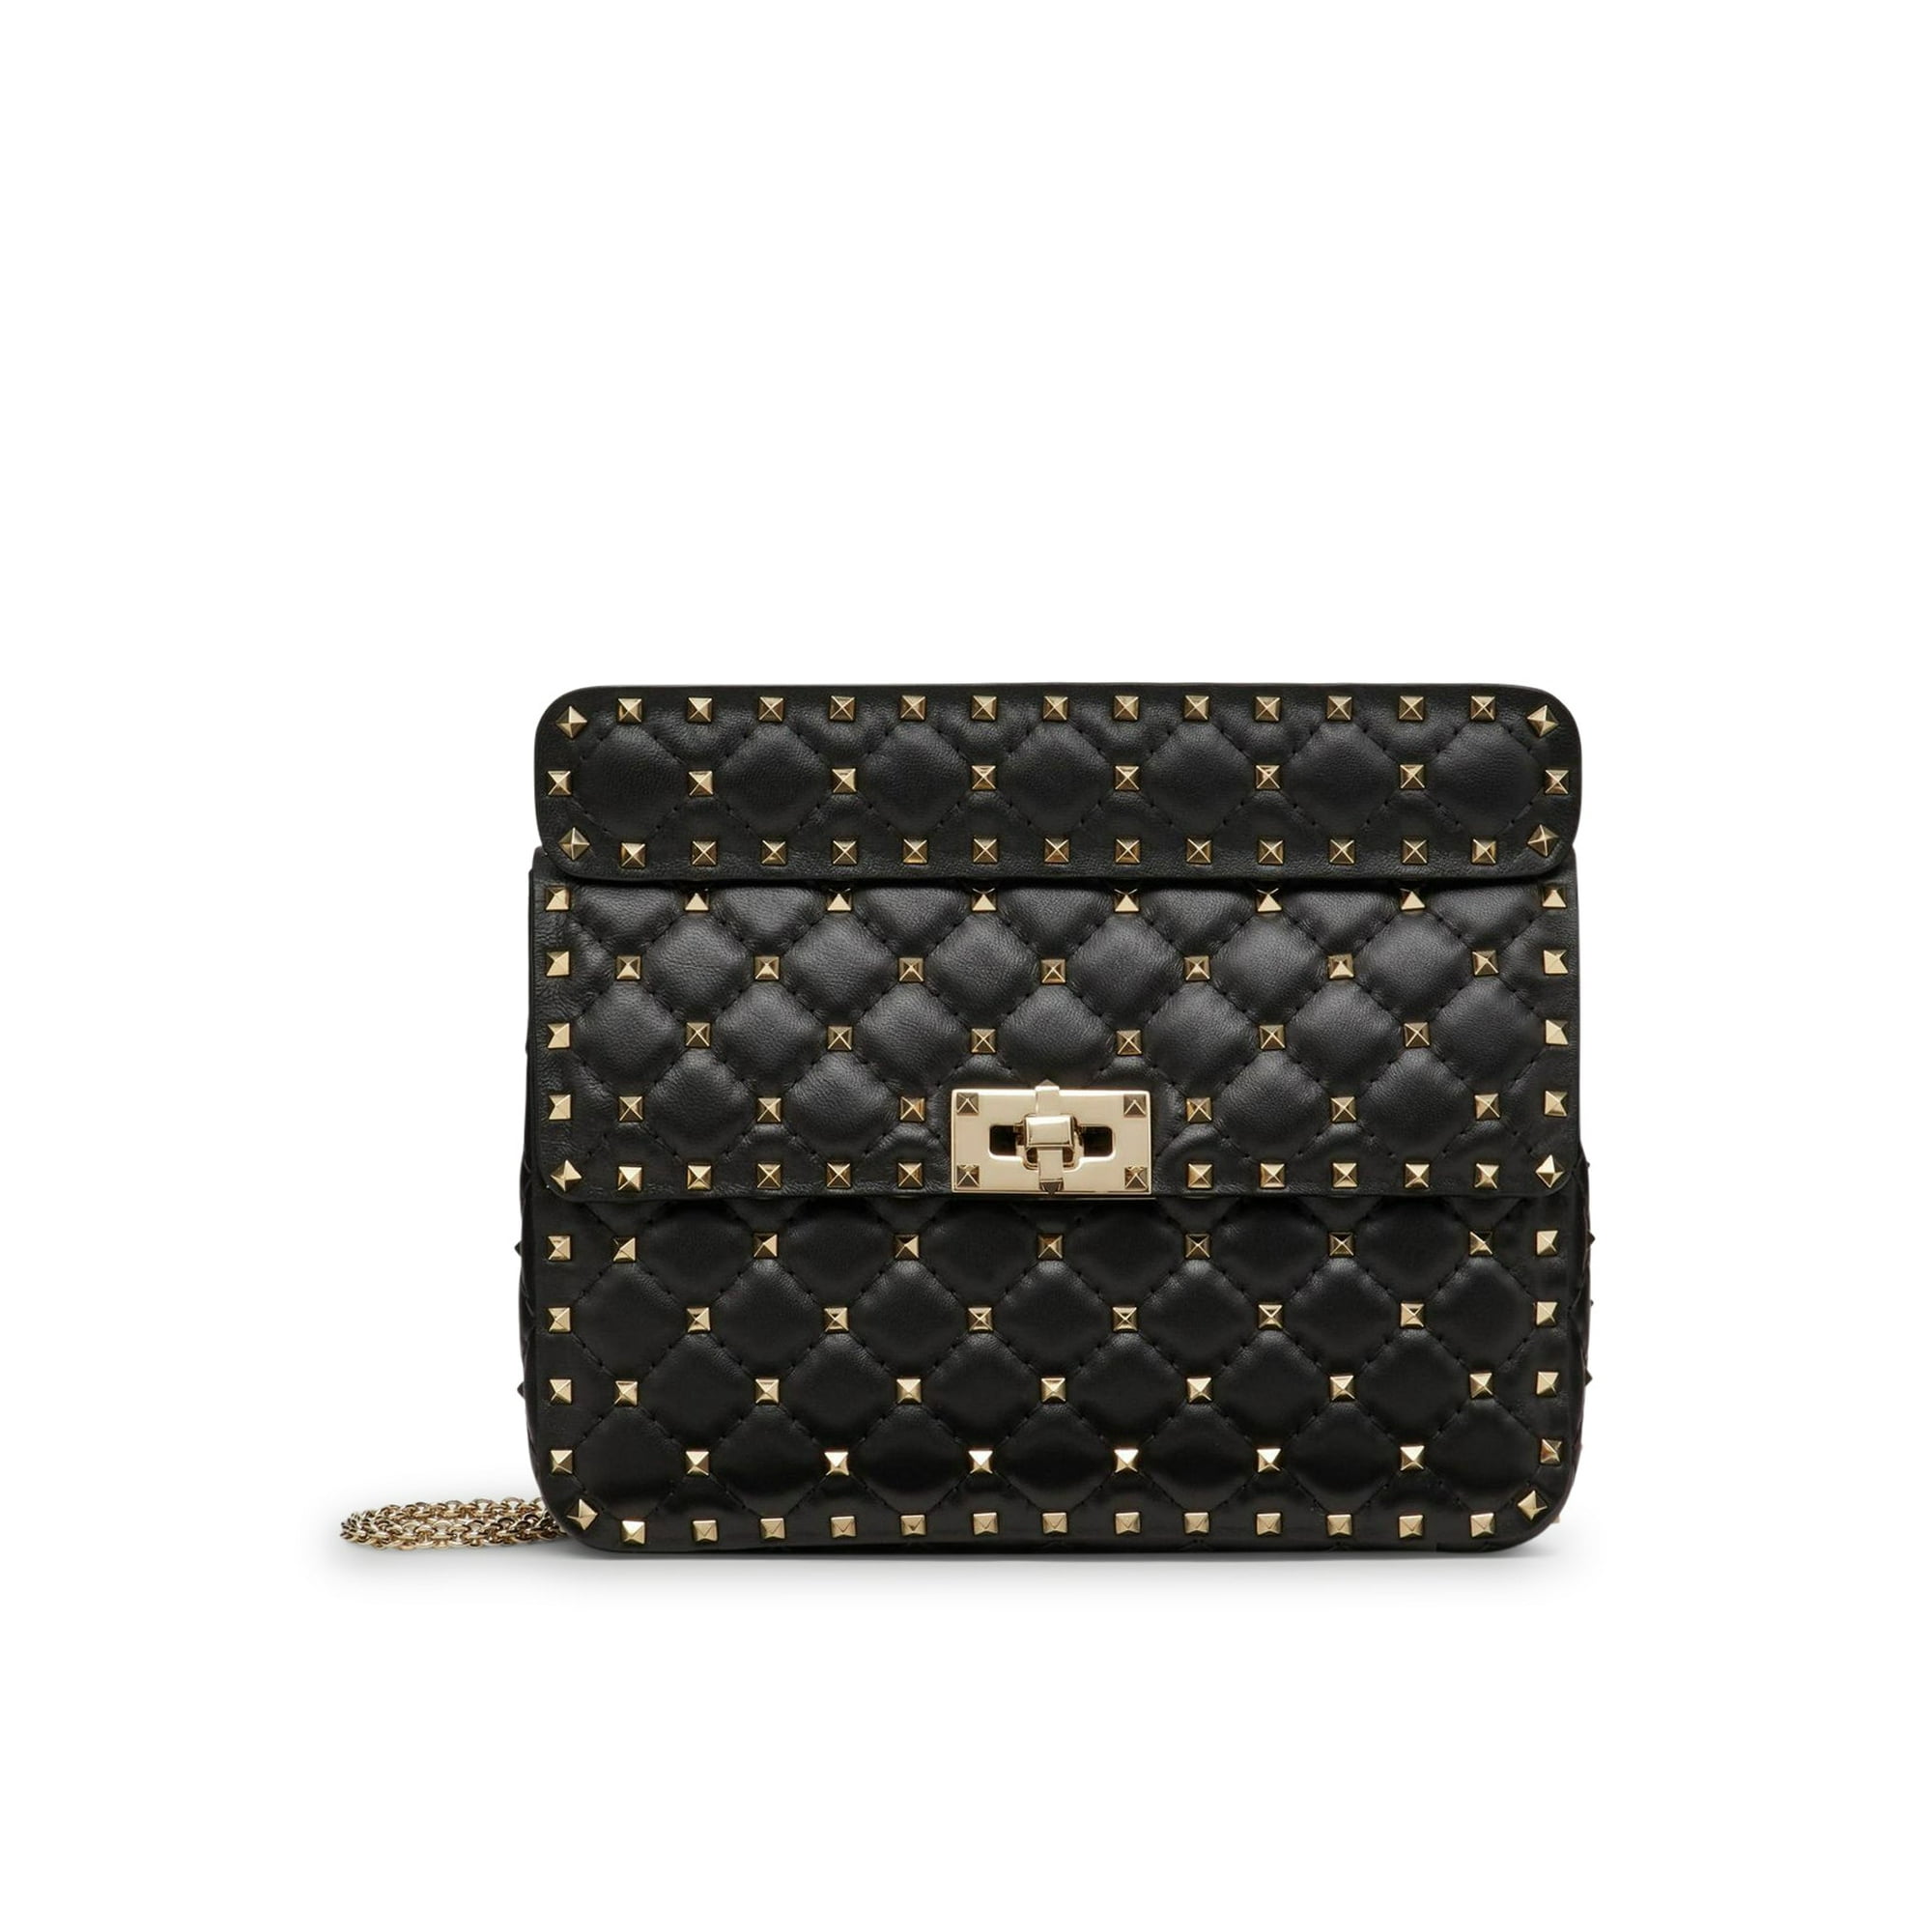 Valentino Garavani Handbags, Purses & Wallets for Women